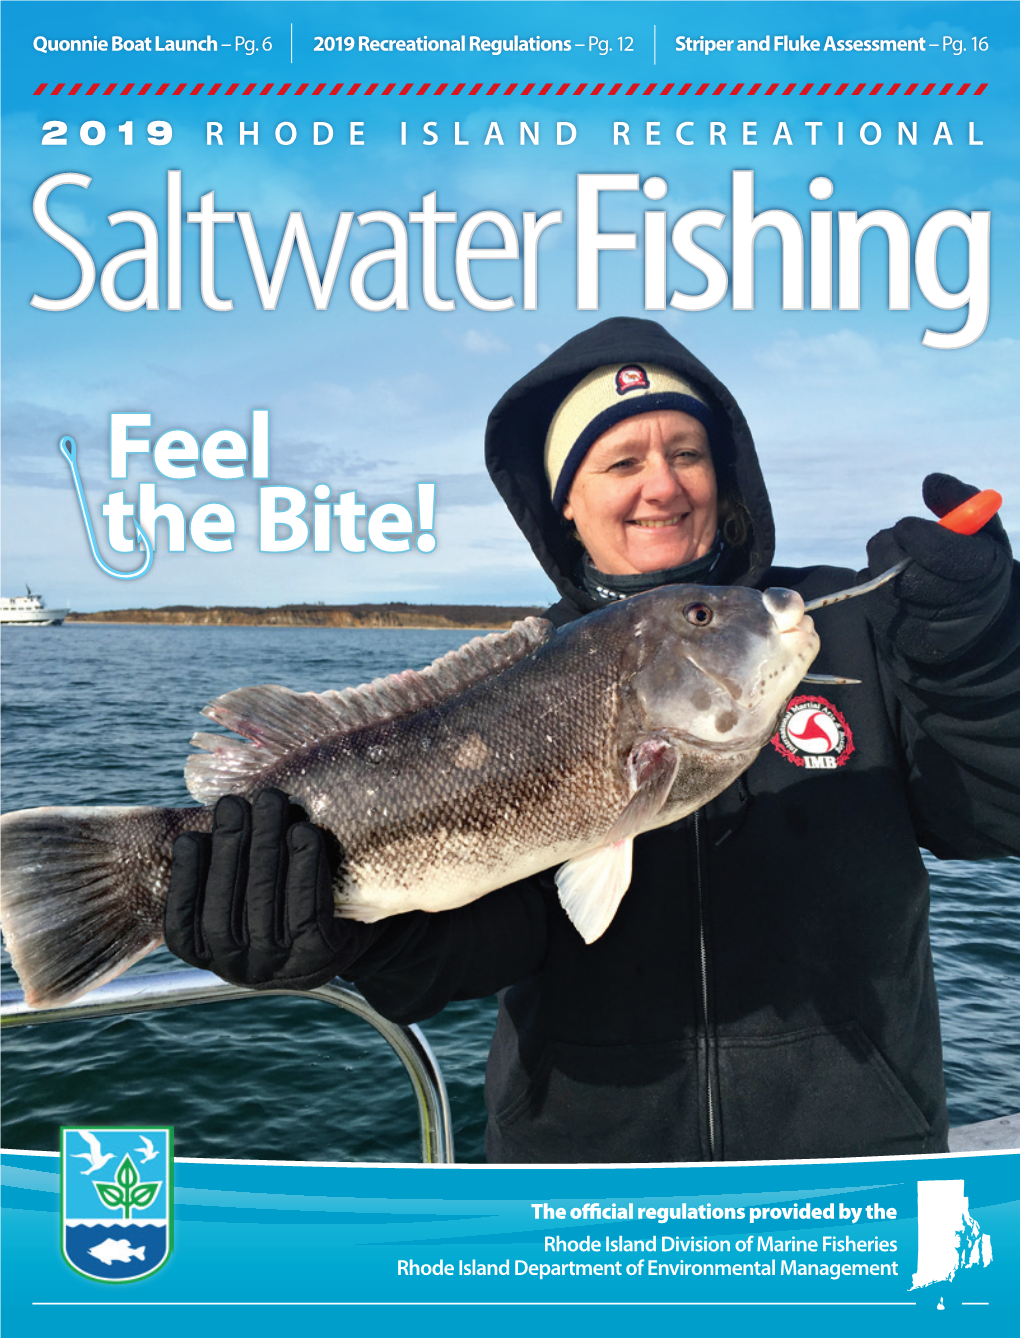 RHODE ISLAND RECREATIONAL Saltwaterfishing Feel the Bite!